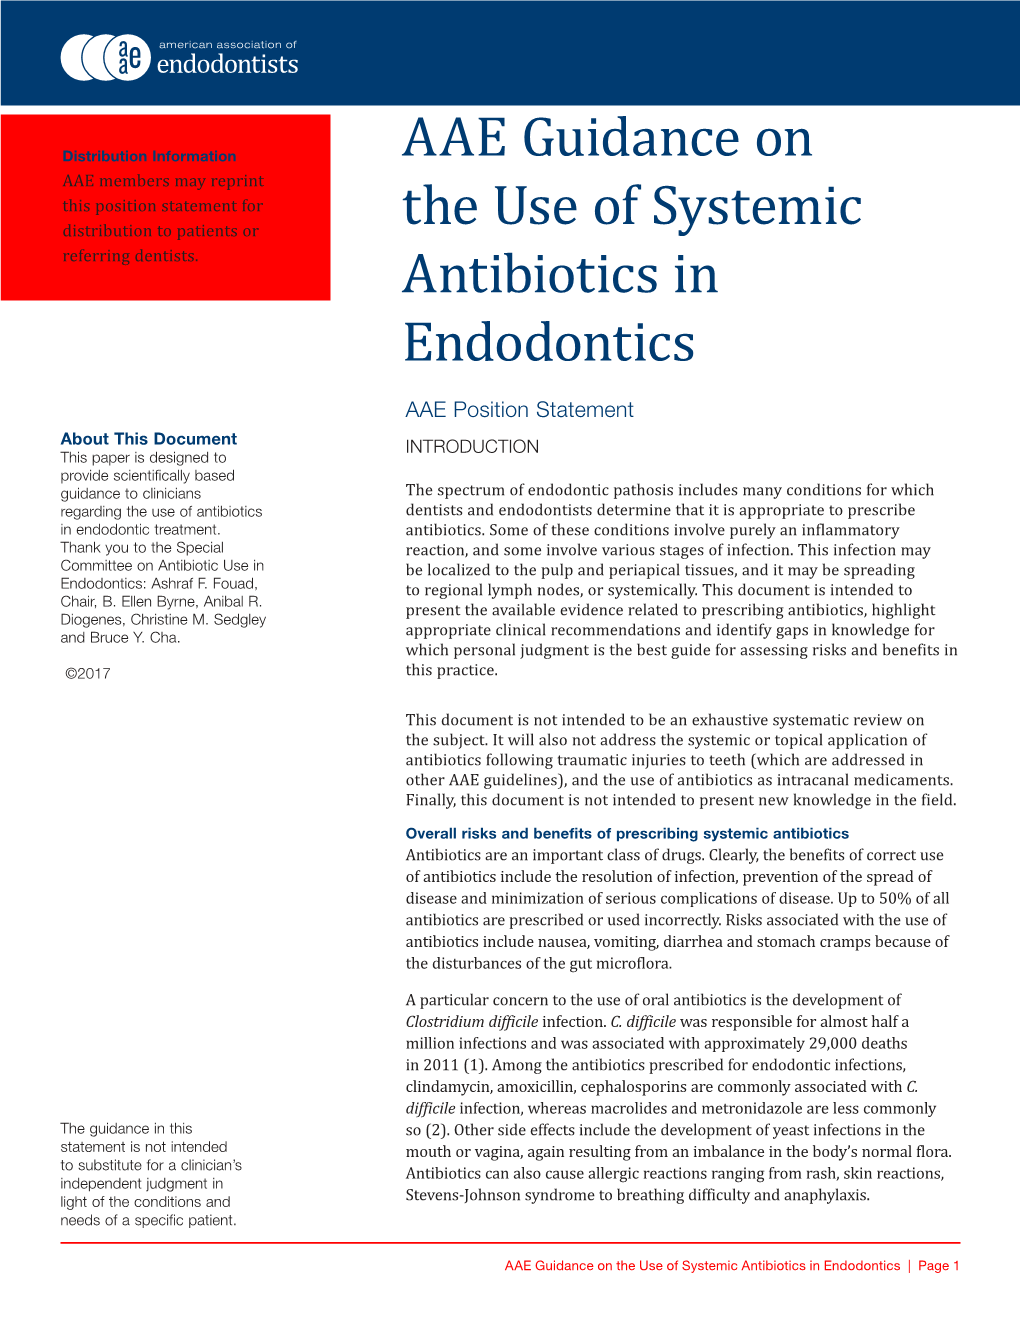 AAE Guidance on the Use of Systemic Antibiotics in Endodontics